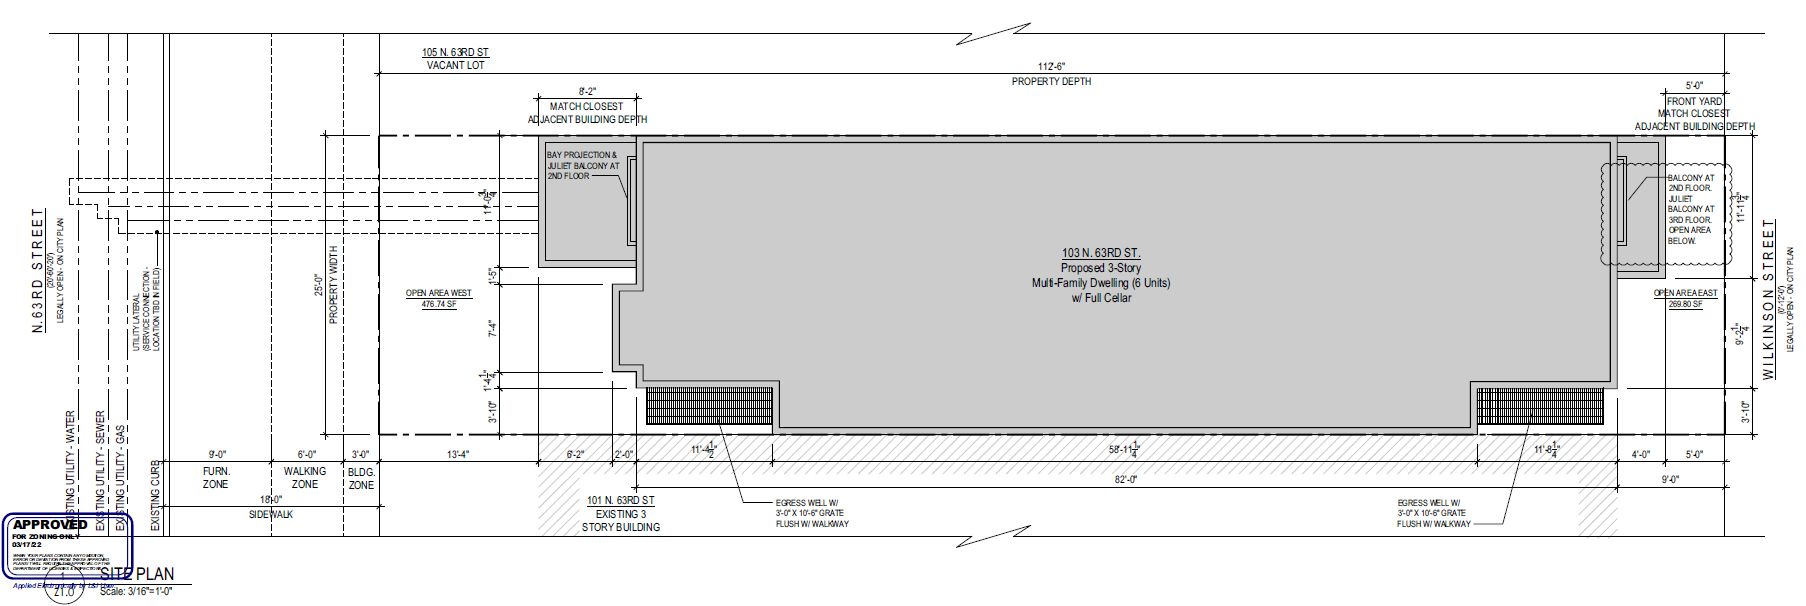 103 North 63rd Street. Site plan. Credit: 24 Seven Design Group via the City of Philadelphia